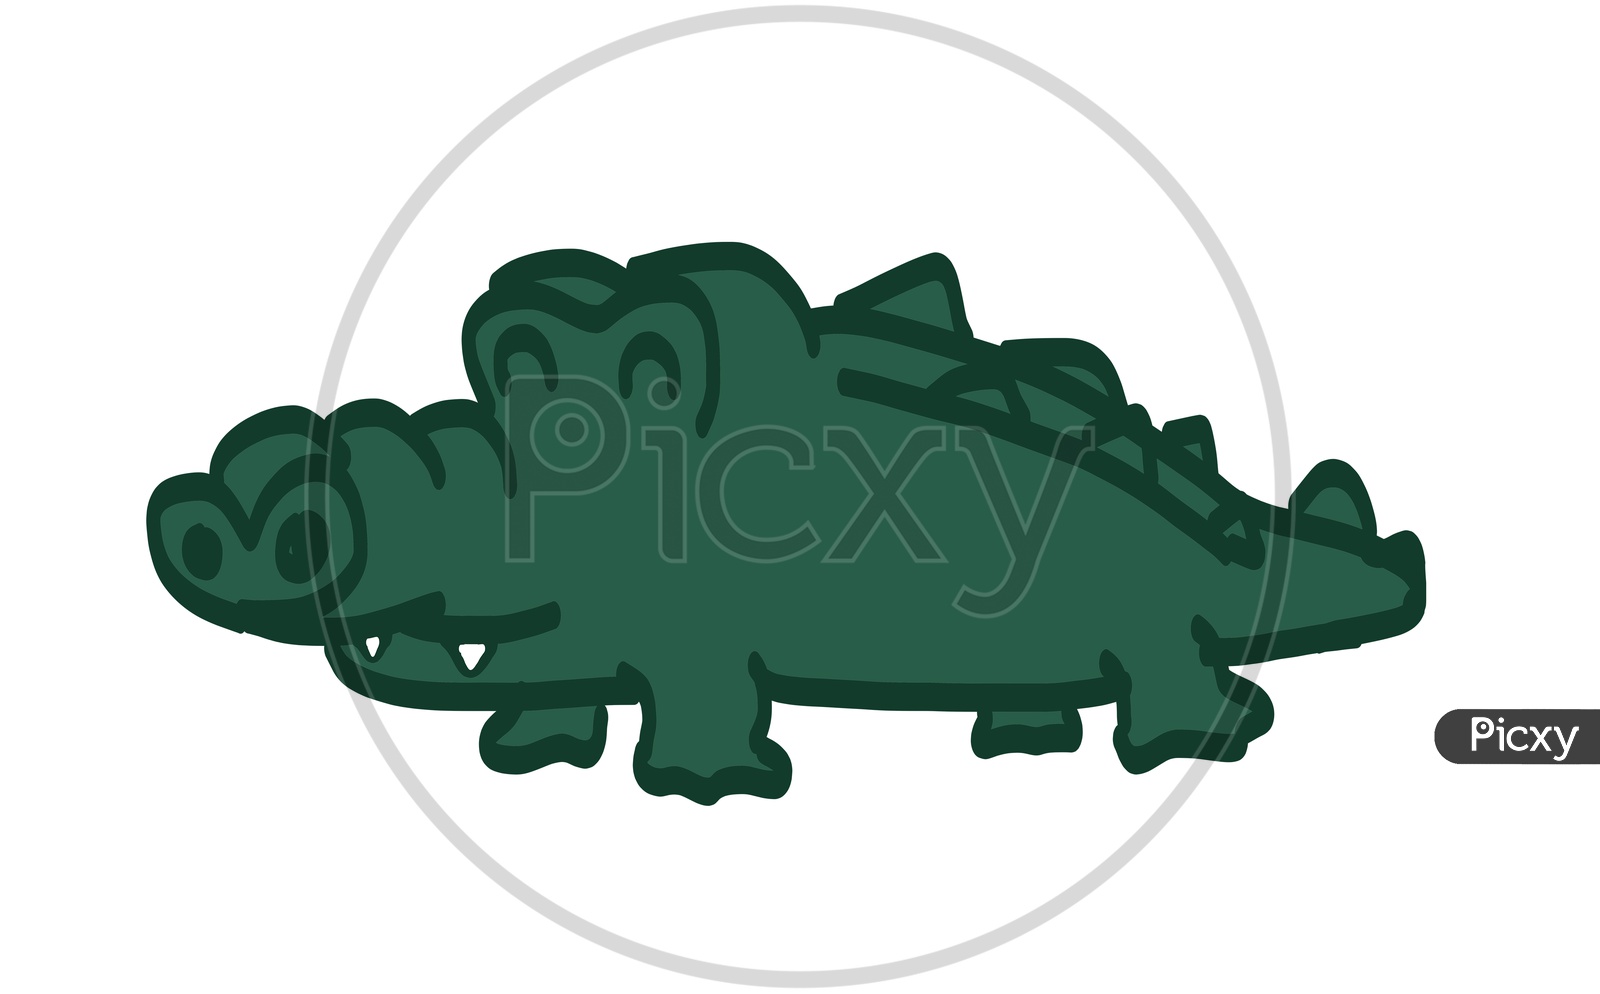 An illustration of crocodile